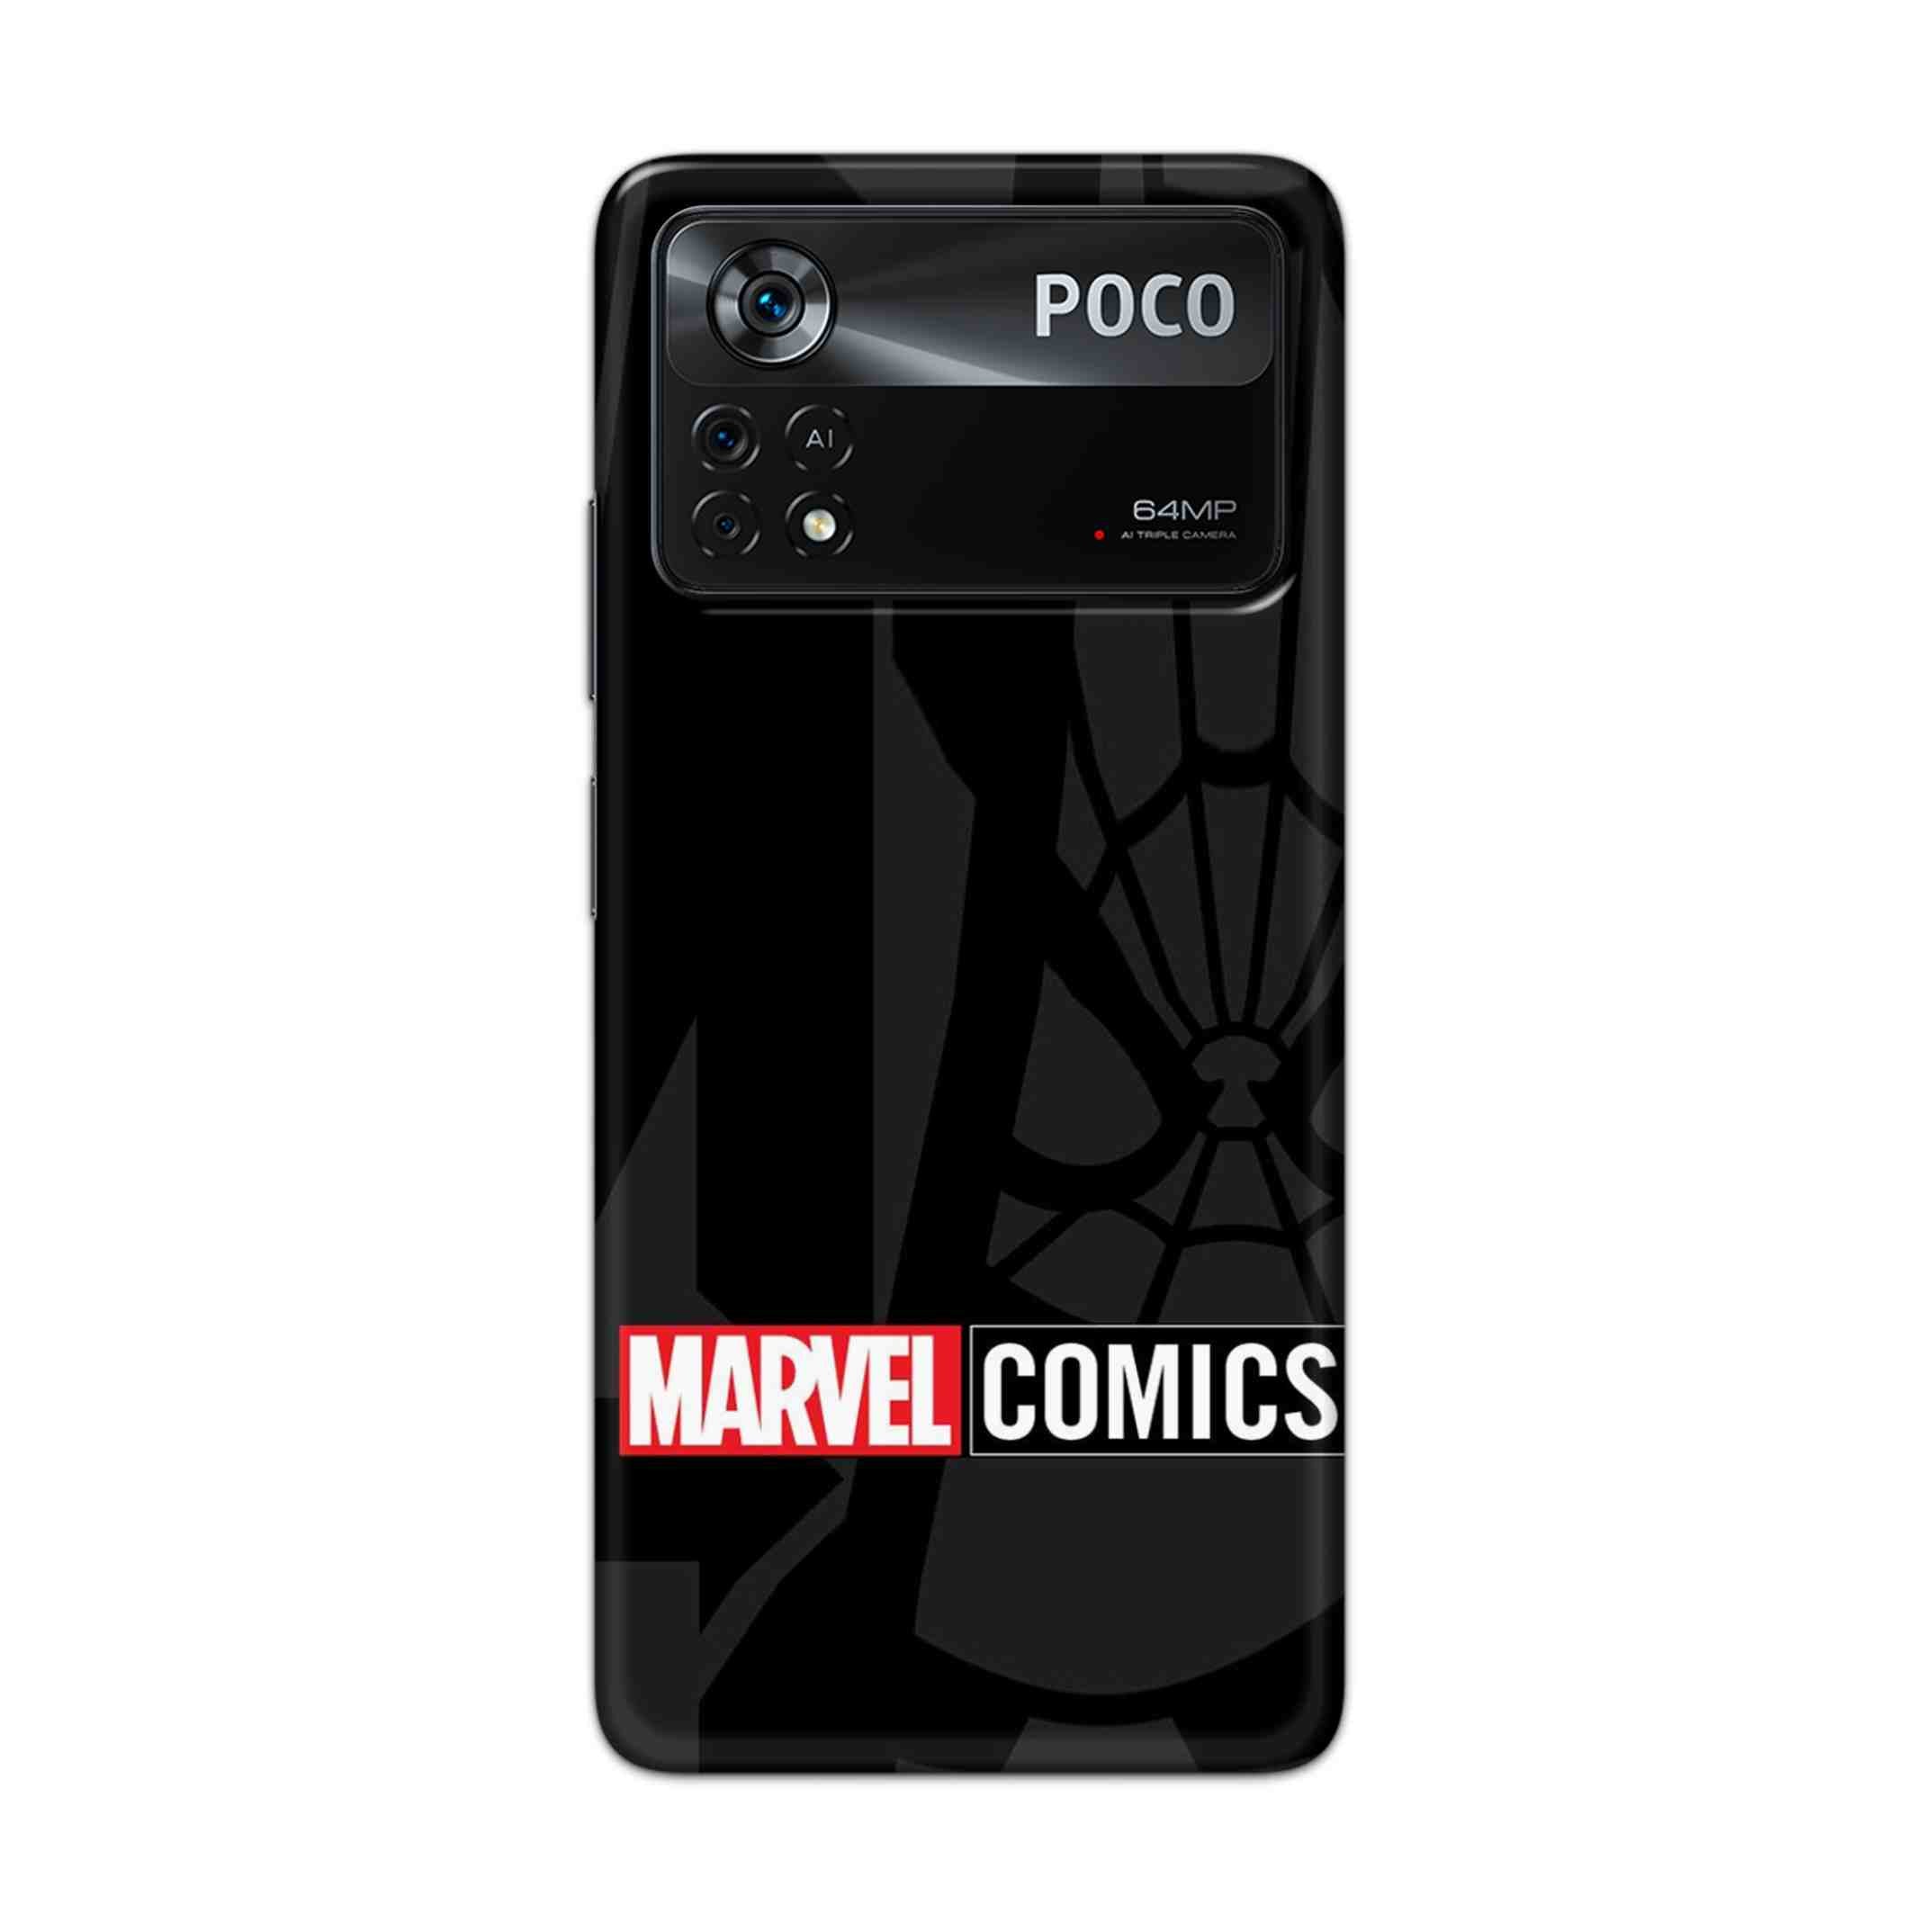 Buy Marvel Comics Hard Back Mobile Phone Case Cover For Poco X4 Pro 5G Online